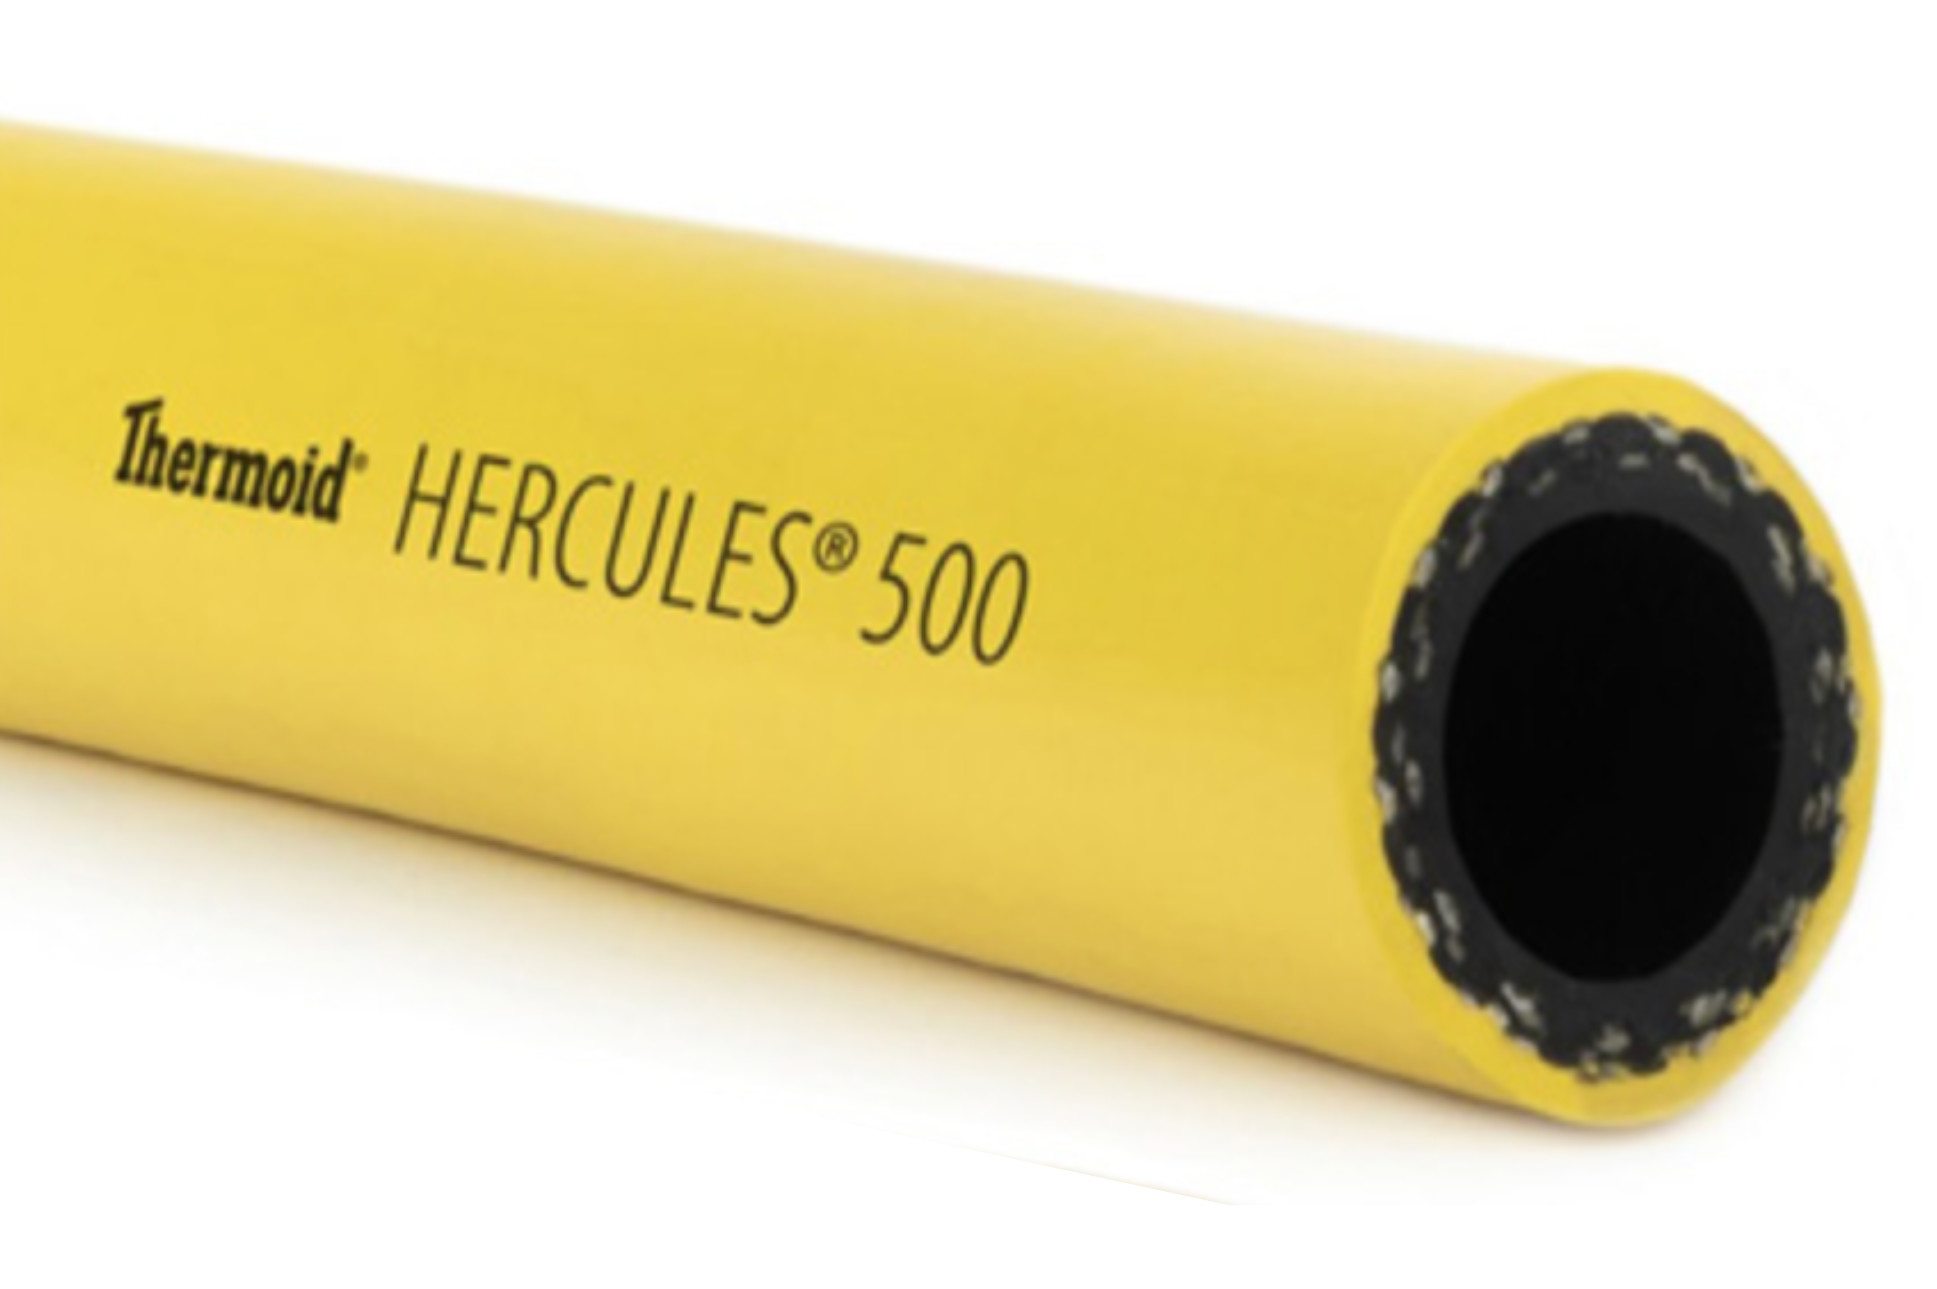 Hose 500 Rubber Couple Multipurpose and Hercules Cut -